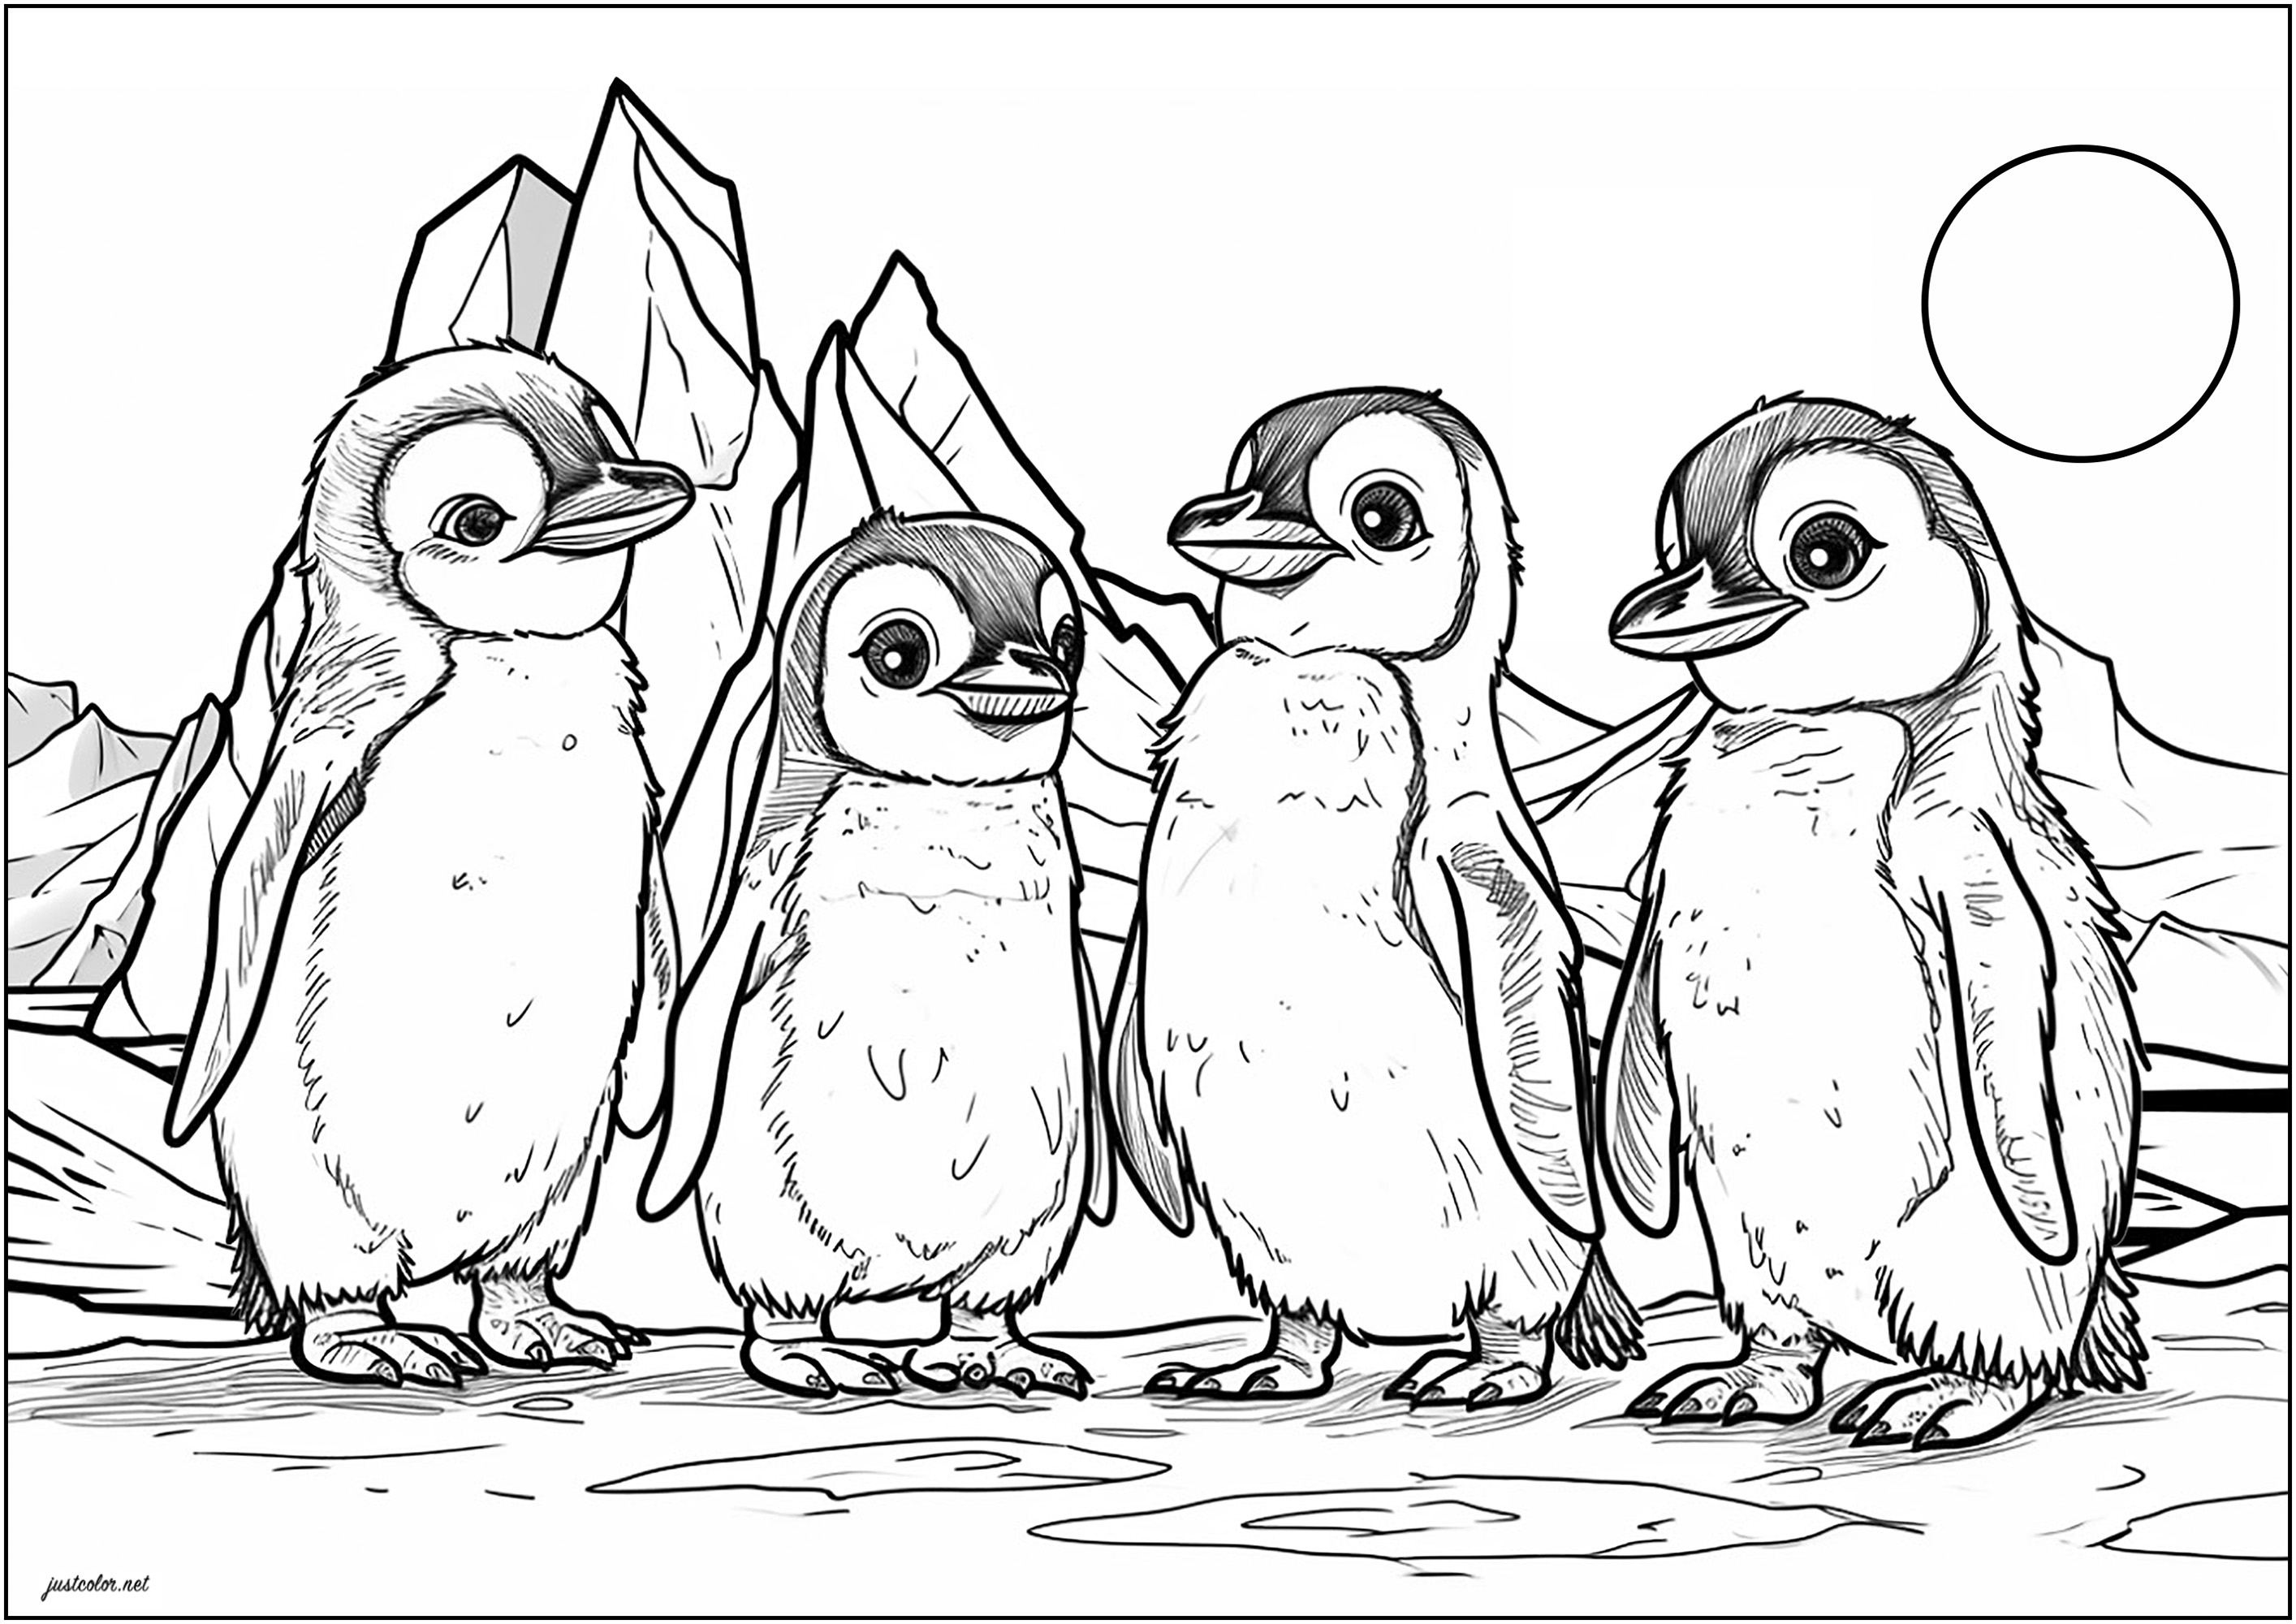 Quatro pequenos pinguins num bloco de gelo